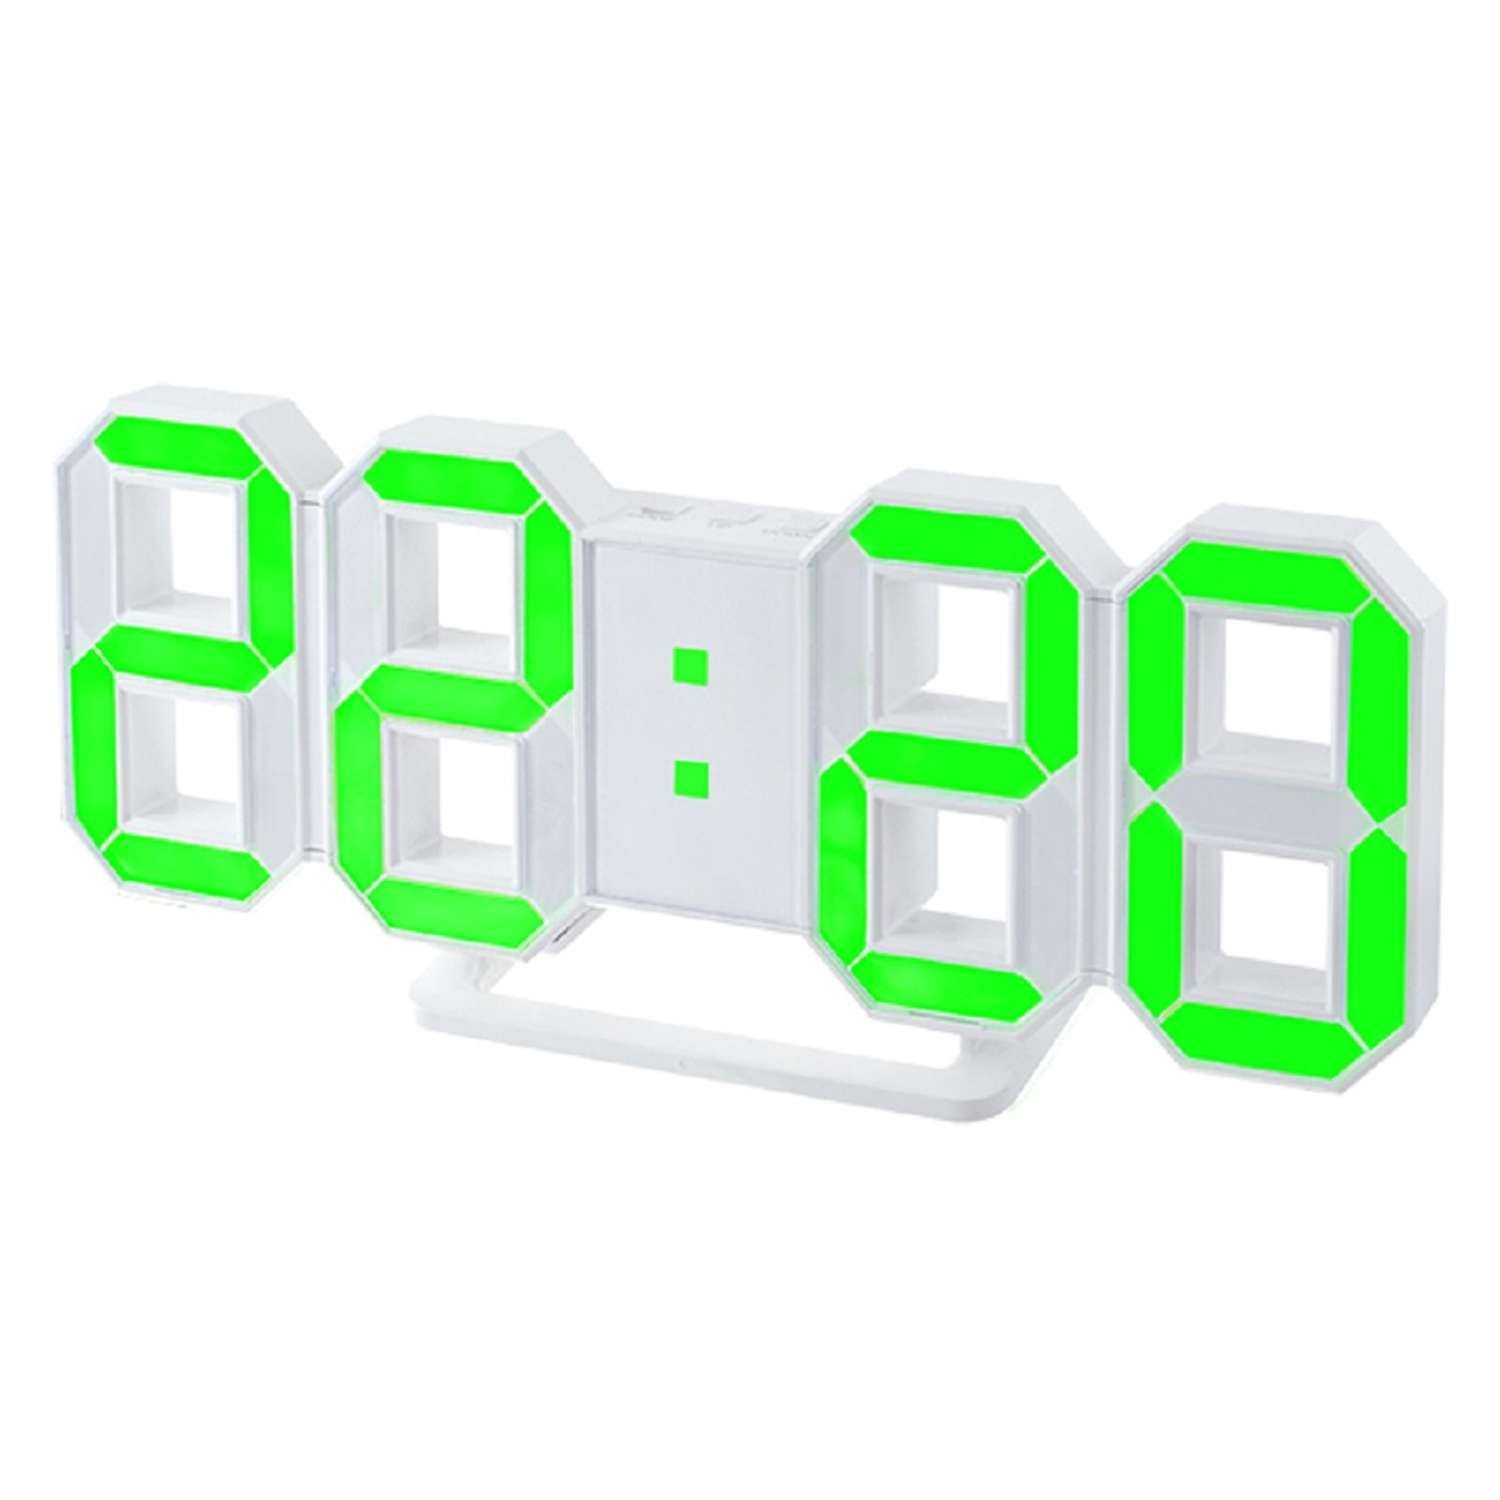 LED часы-будильник Perfeo LUMINOUS белый корпус зелёная подсветка PF-663 - фото 1